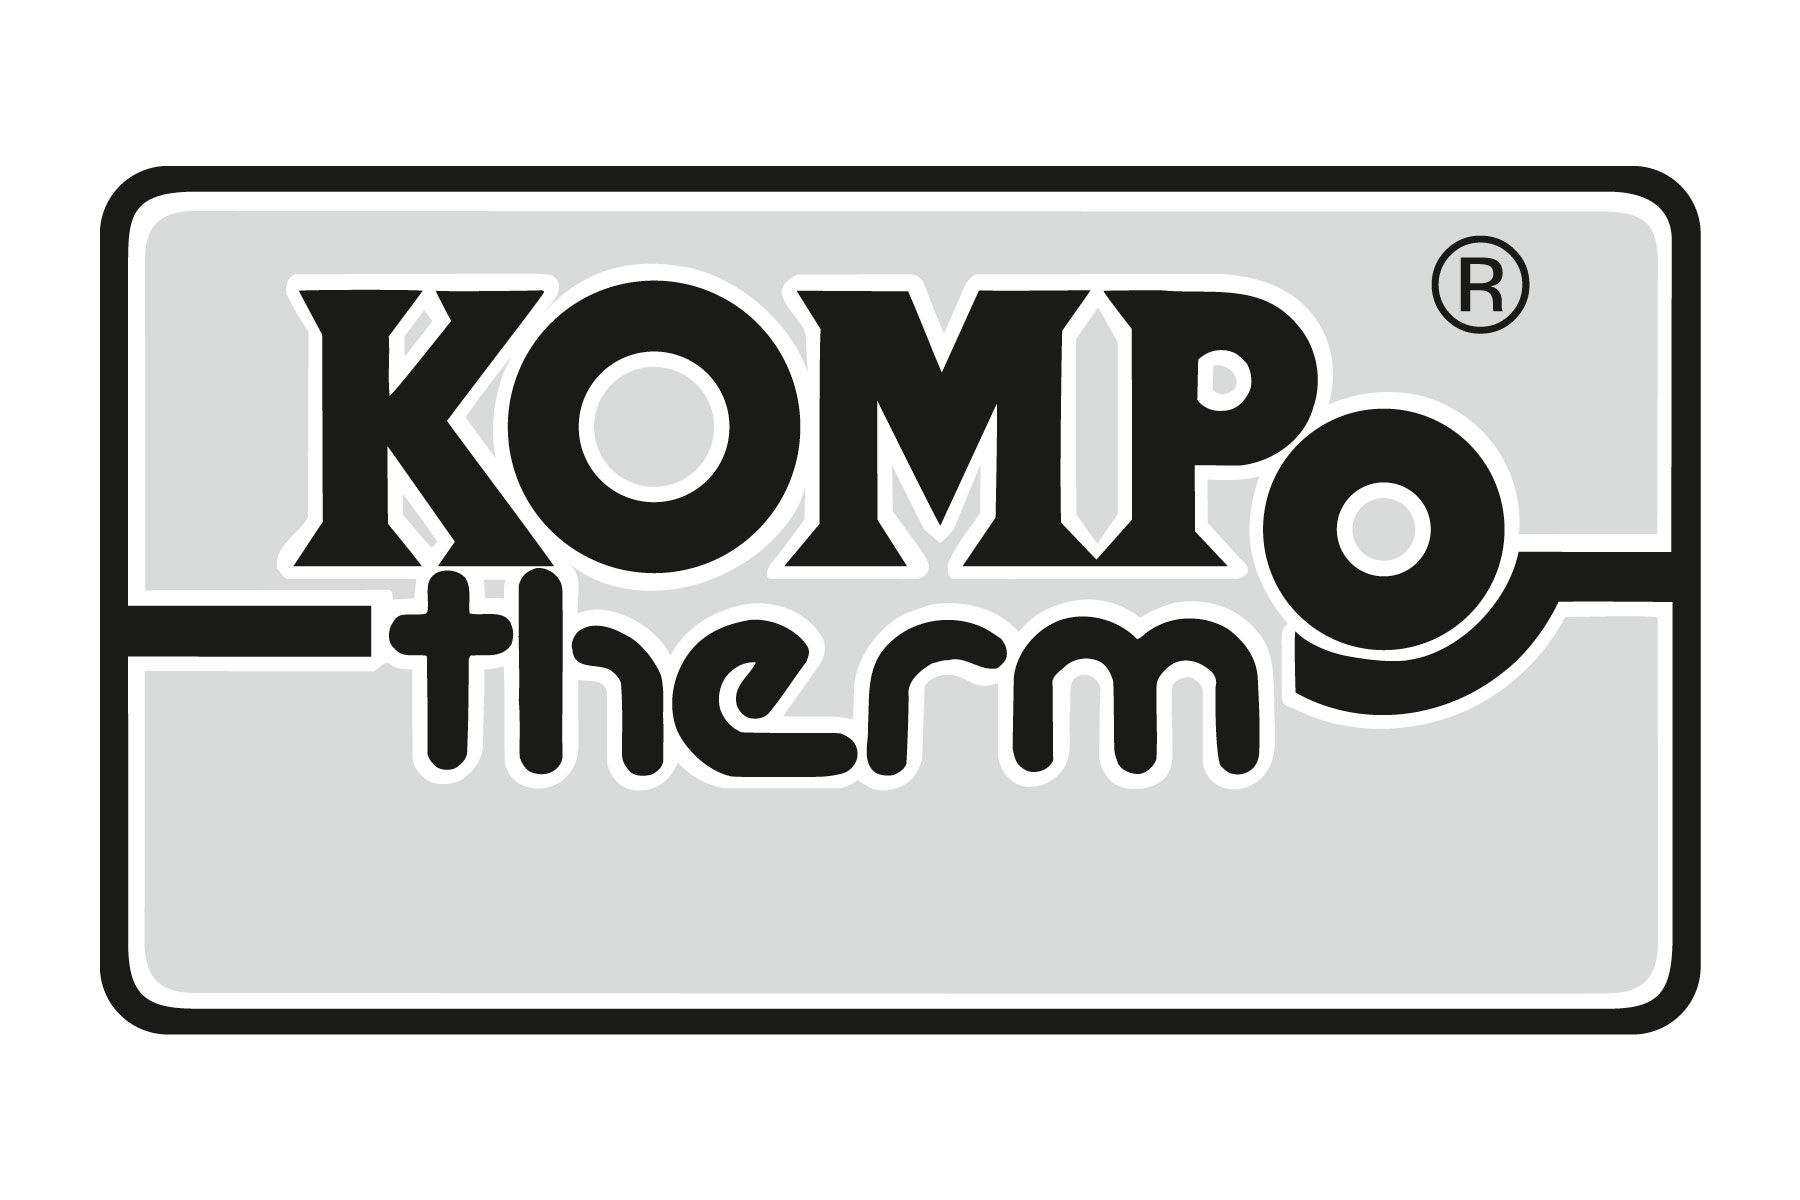 Logo KOMPOtherm